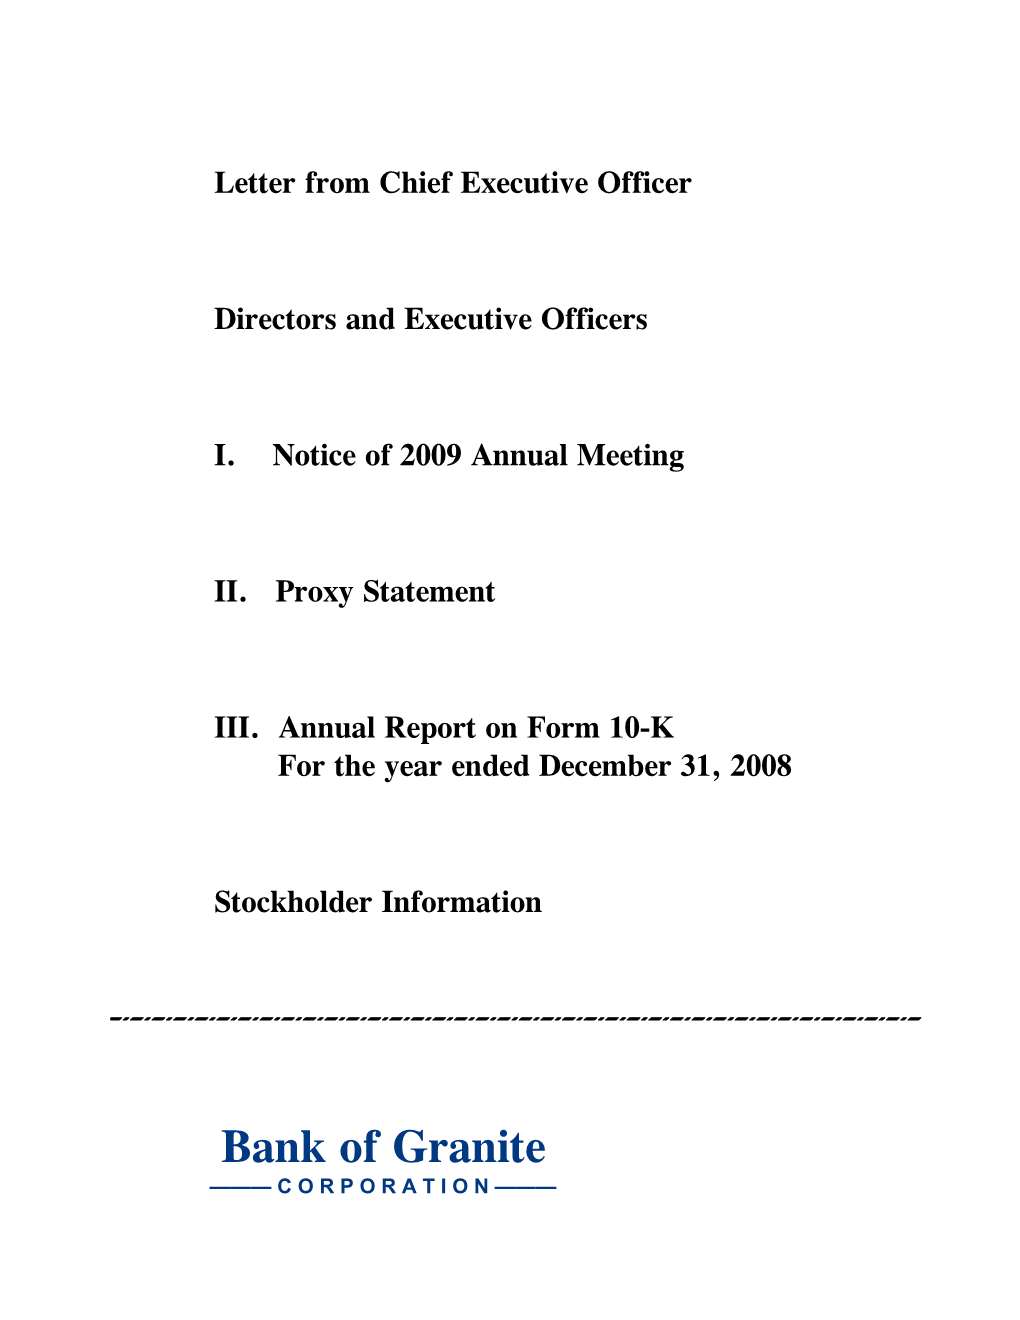 Bank of Granite ——— C O R P O R a T I O N ——— to Our Stockholders, Customers, Employees & Friends